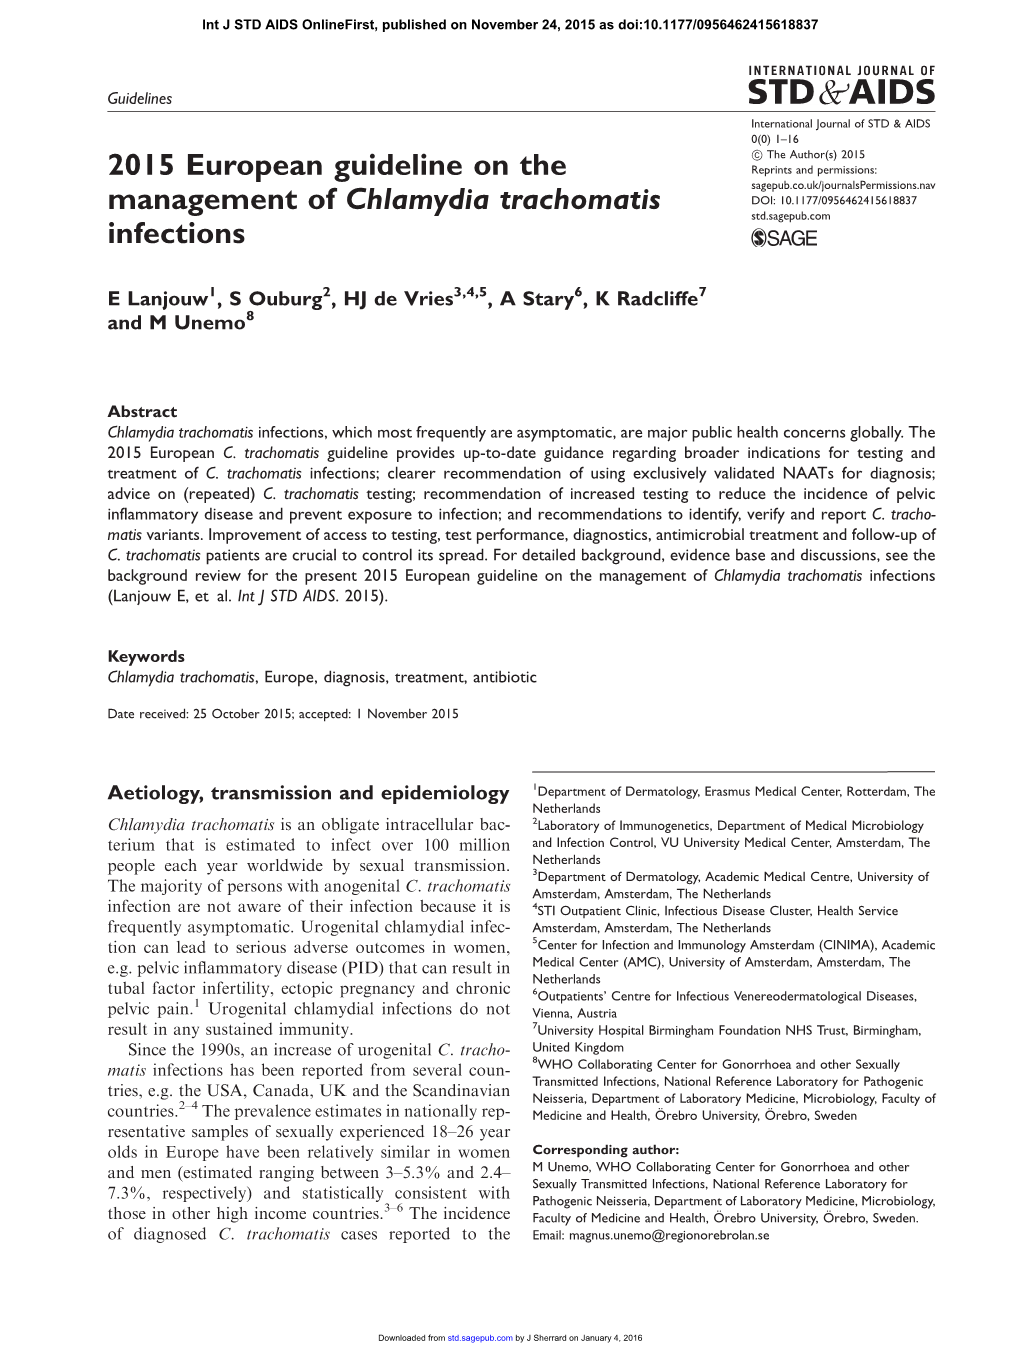 2015 European Guideline on the Management of Chlamydia Trachomatis Infections (Lanjouw E, Et Al